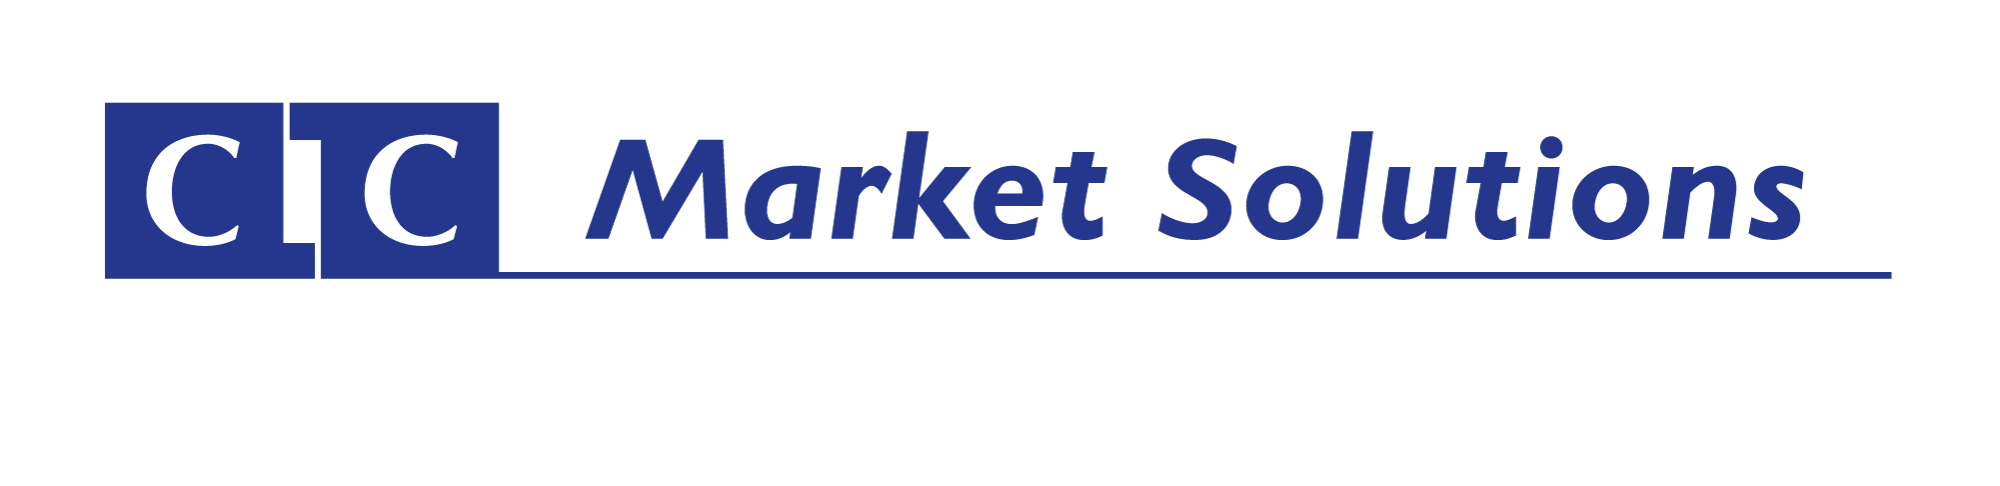 logo CIC Market Solutions